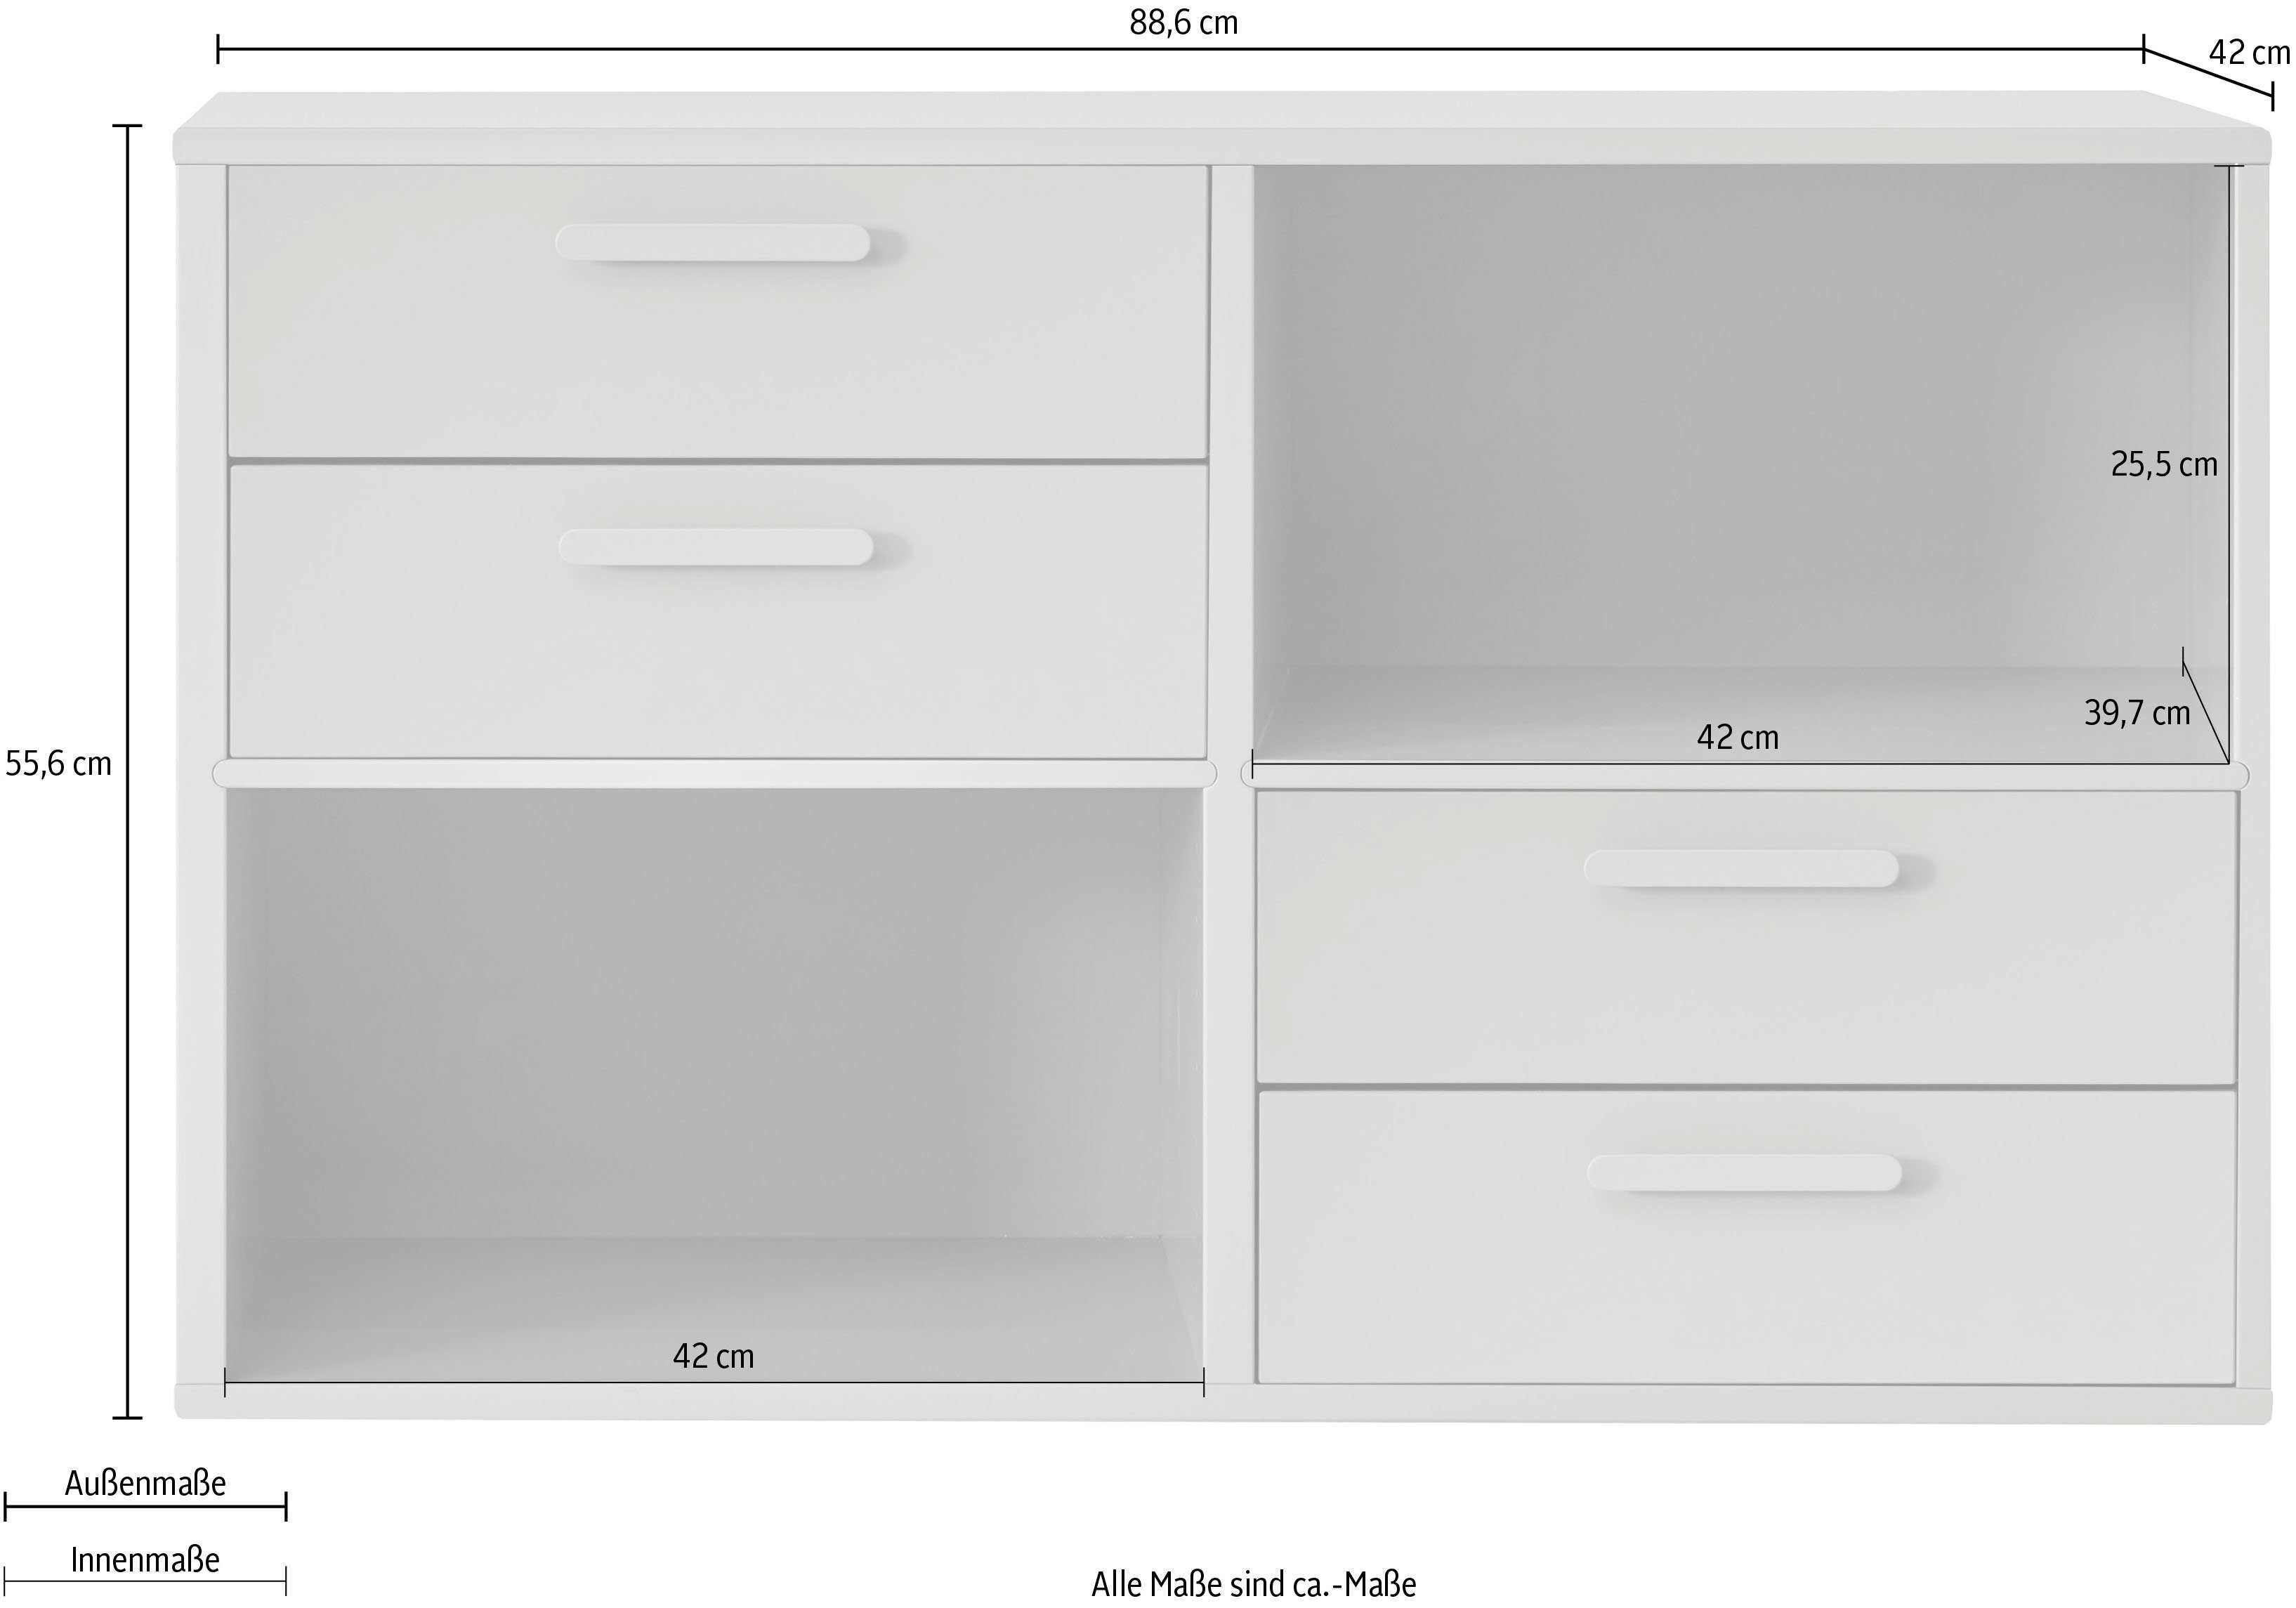 Hammel Furniture Türen, Breite Möbelserie Hellgrün cm, Hellgrün Hammel, 2 Regal mit Keep flexible by | 88,6